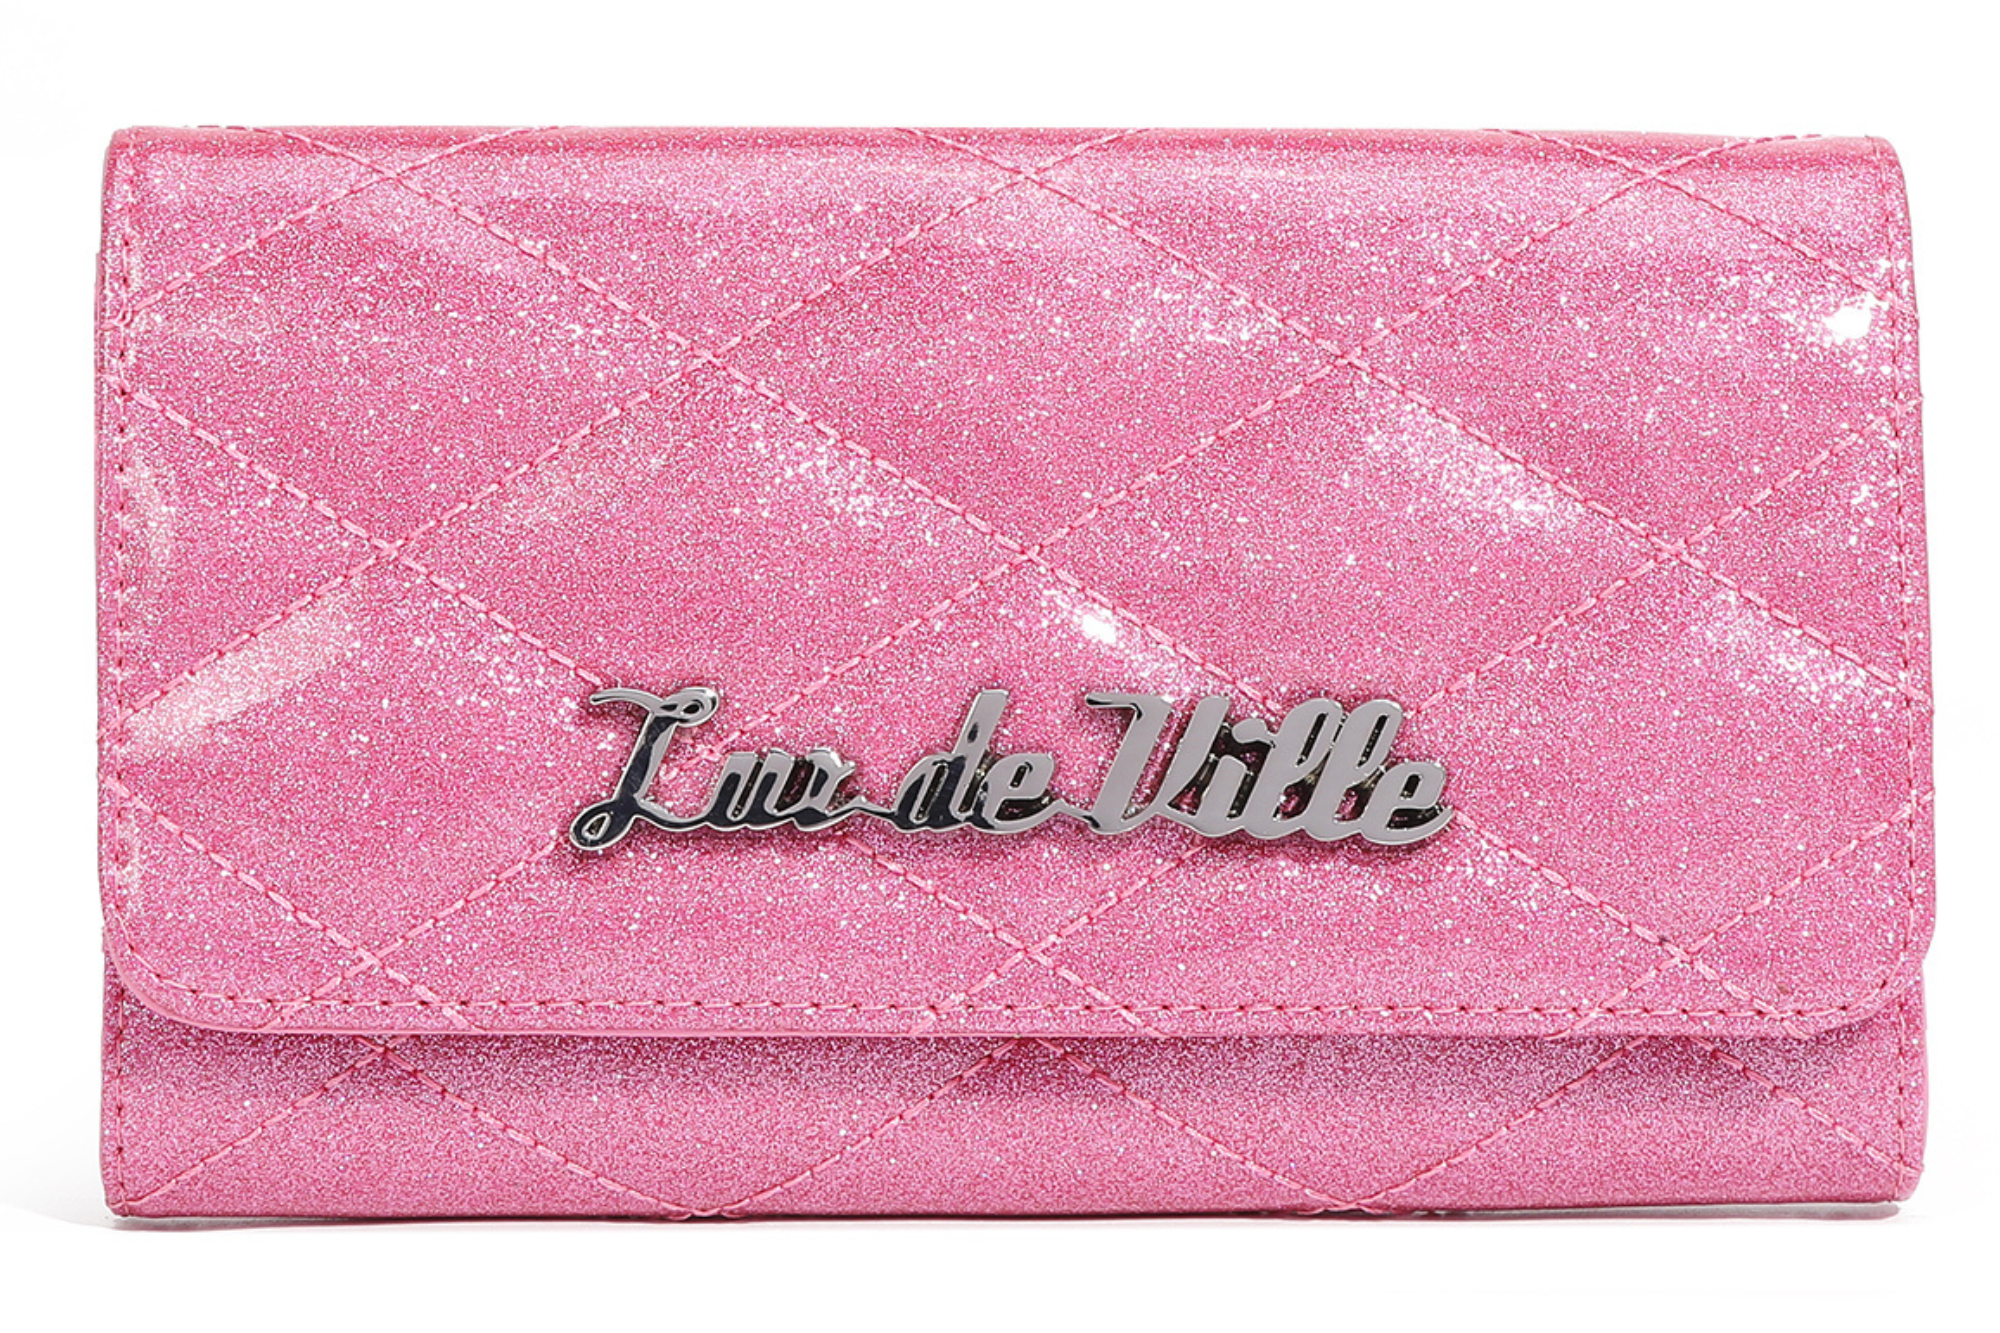 Lux de Ville Logo Wallets for Women